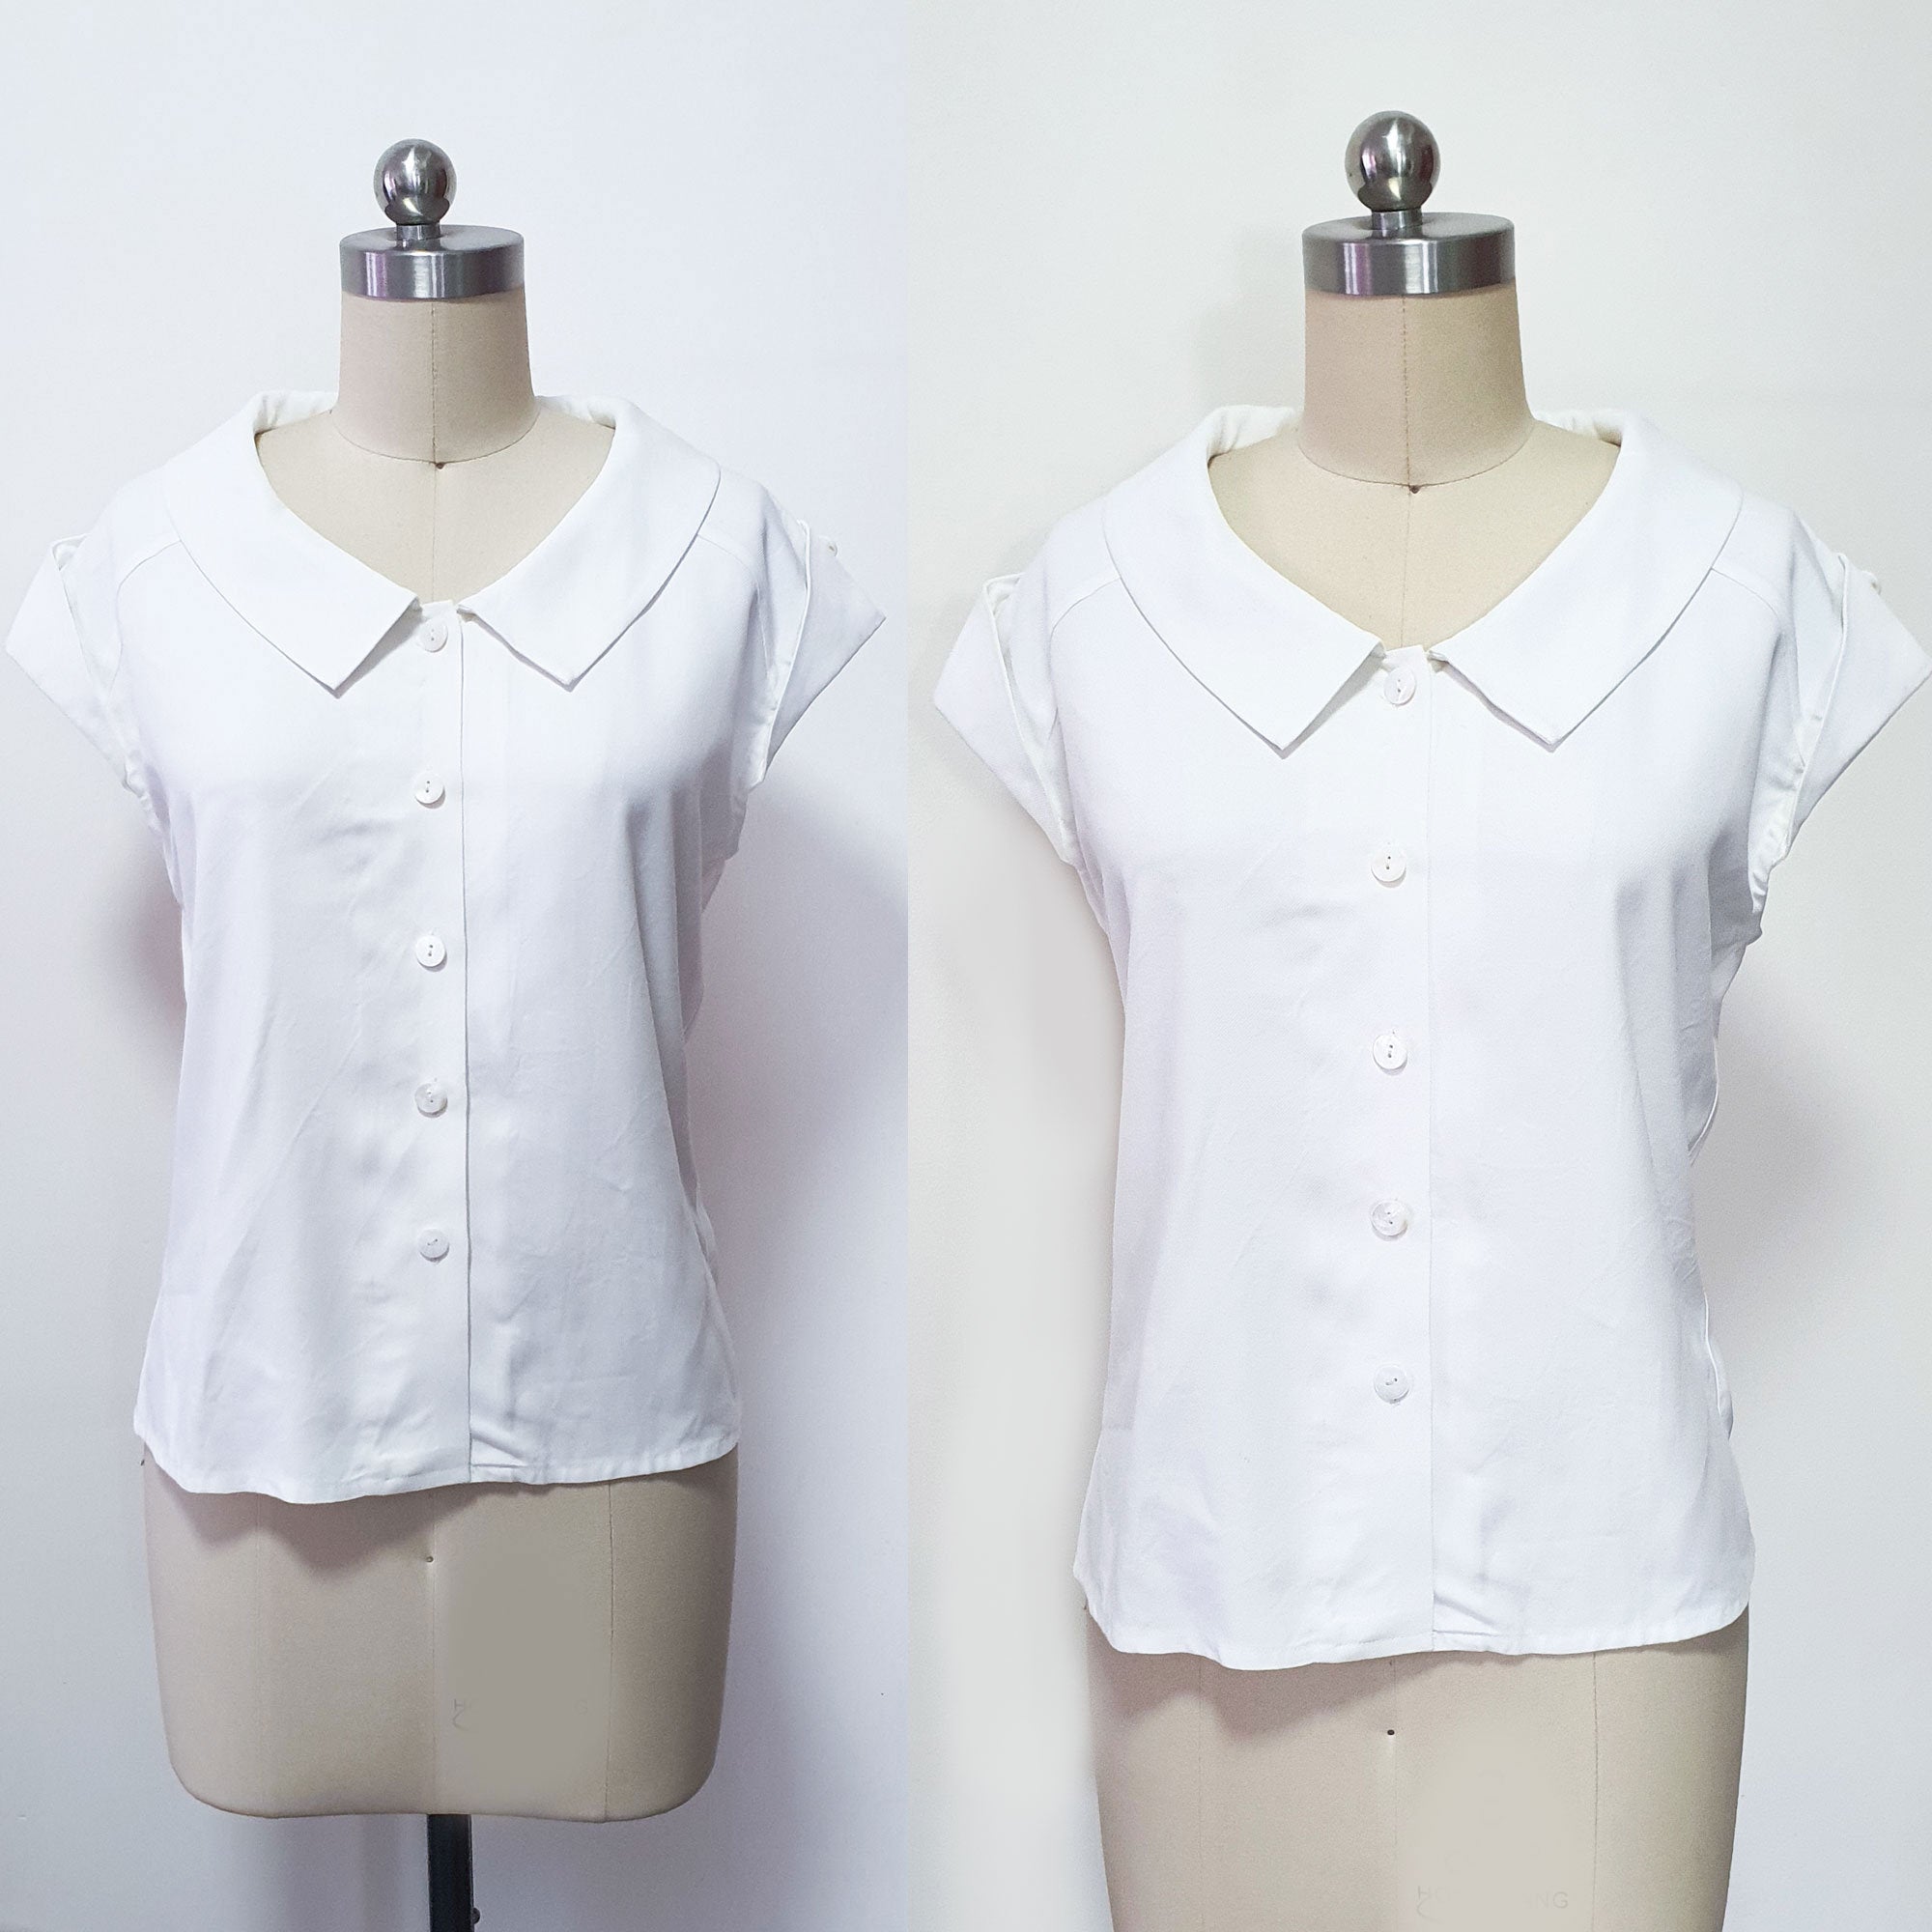 Gambit blouse white summer vintage 1960s top preppy shirt Custom Made Beth Harmon inspired blouse Vintage 60s inspired blouse